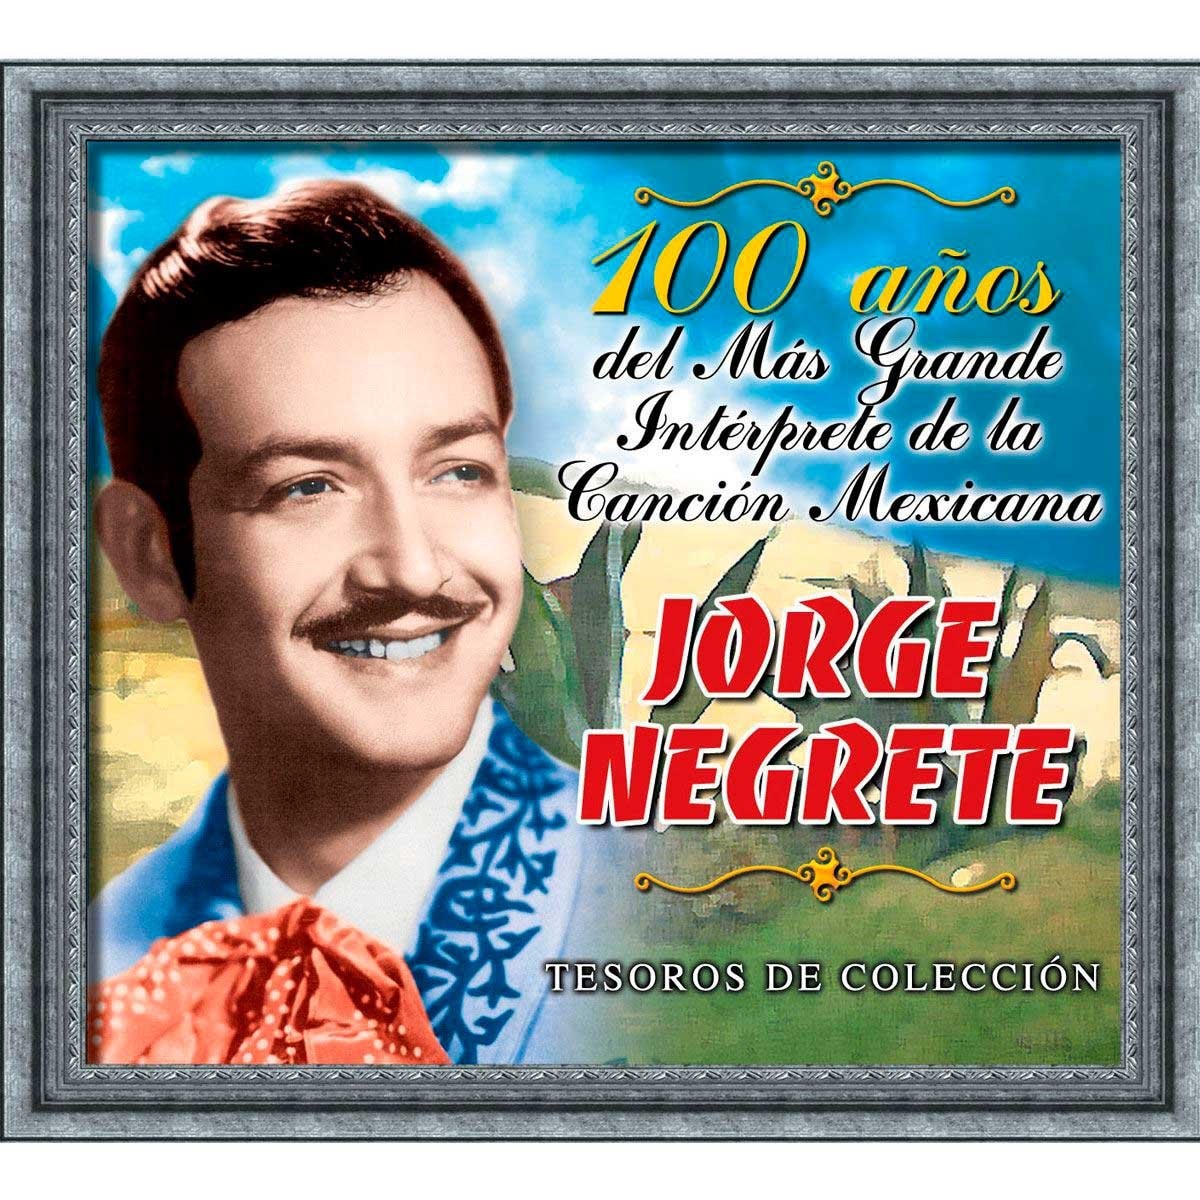 3 Cd´s Jorge Negrete 100 Años